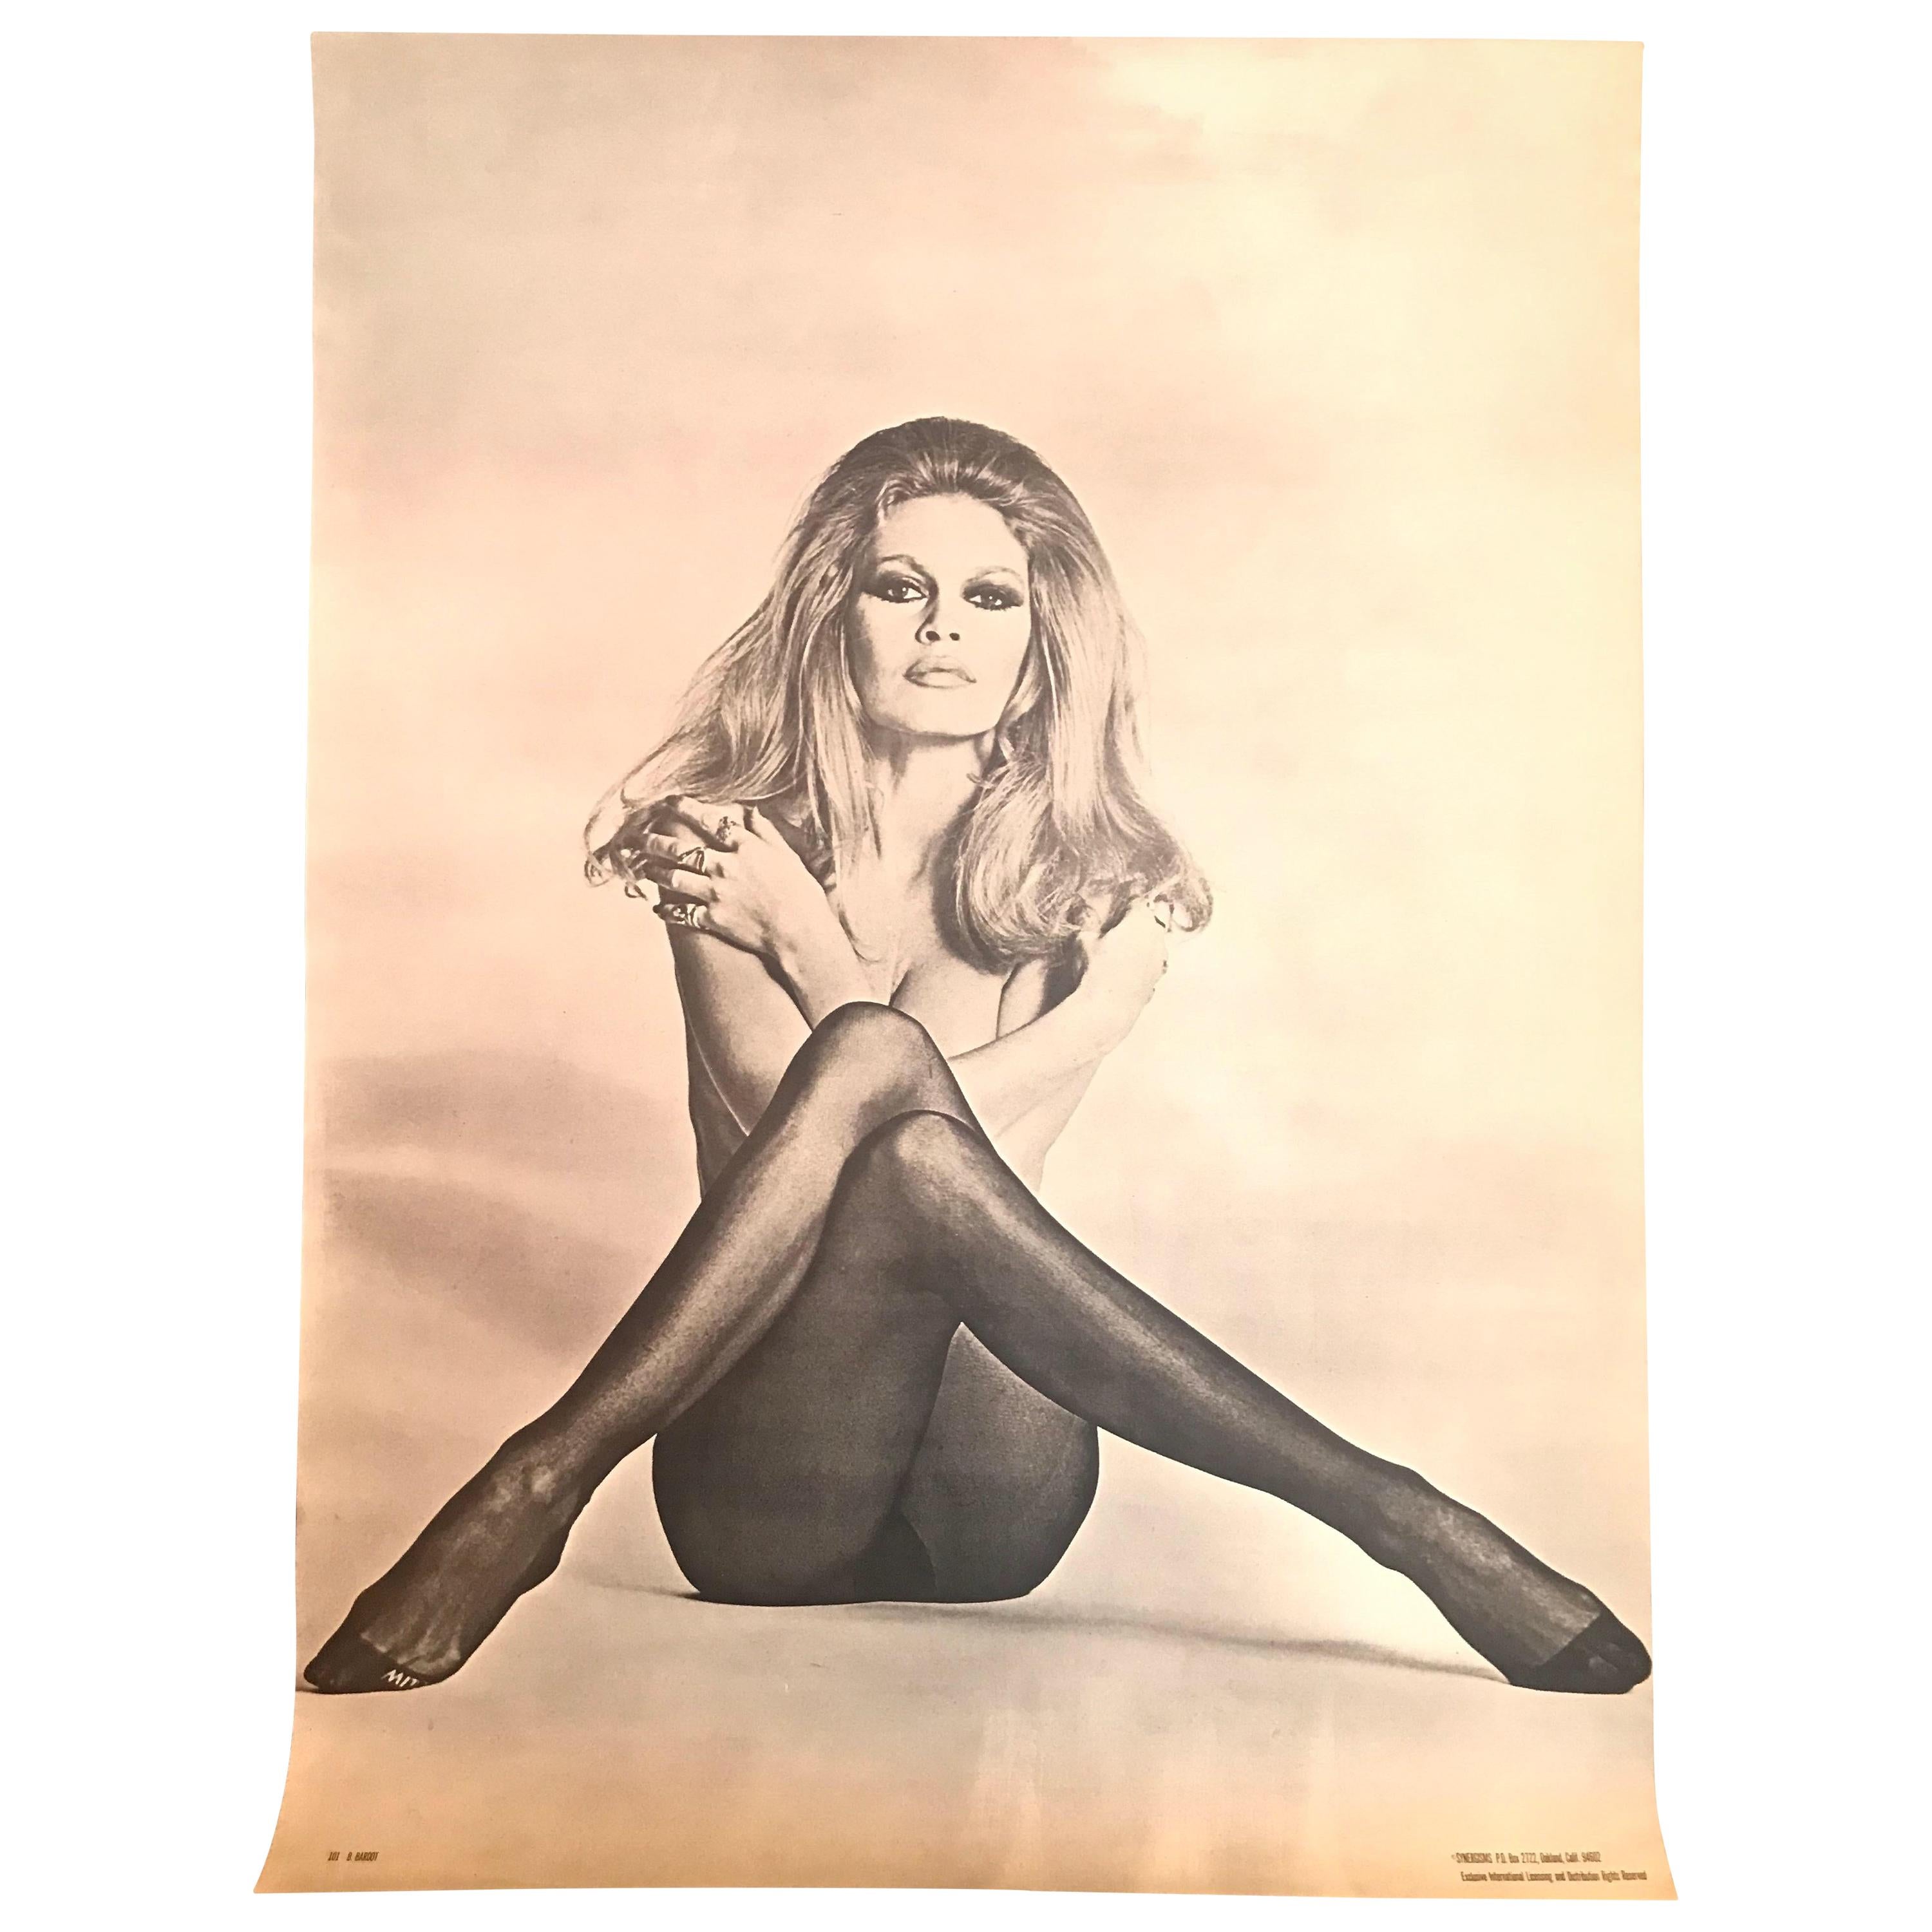 Original Iconic and Rare Vintage Brigitte Bardot Poster from 1970